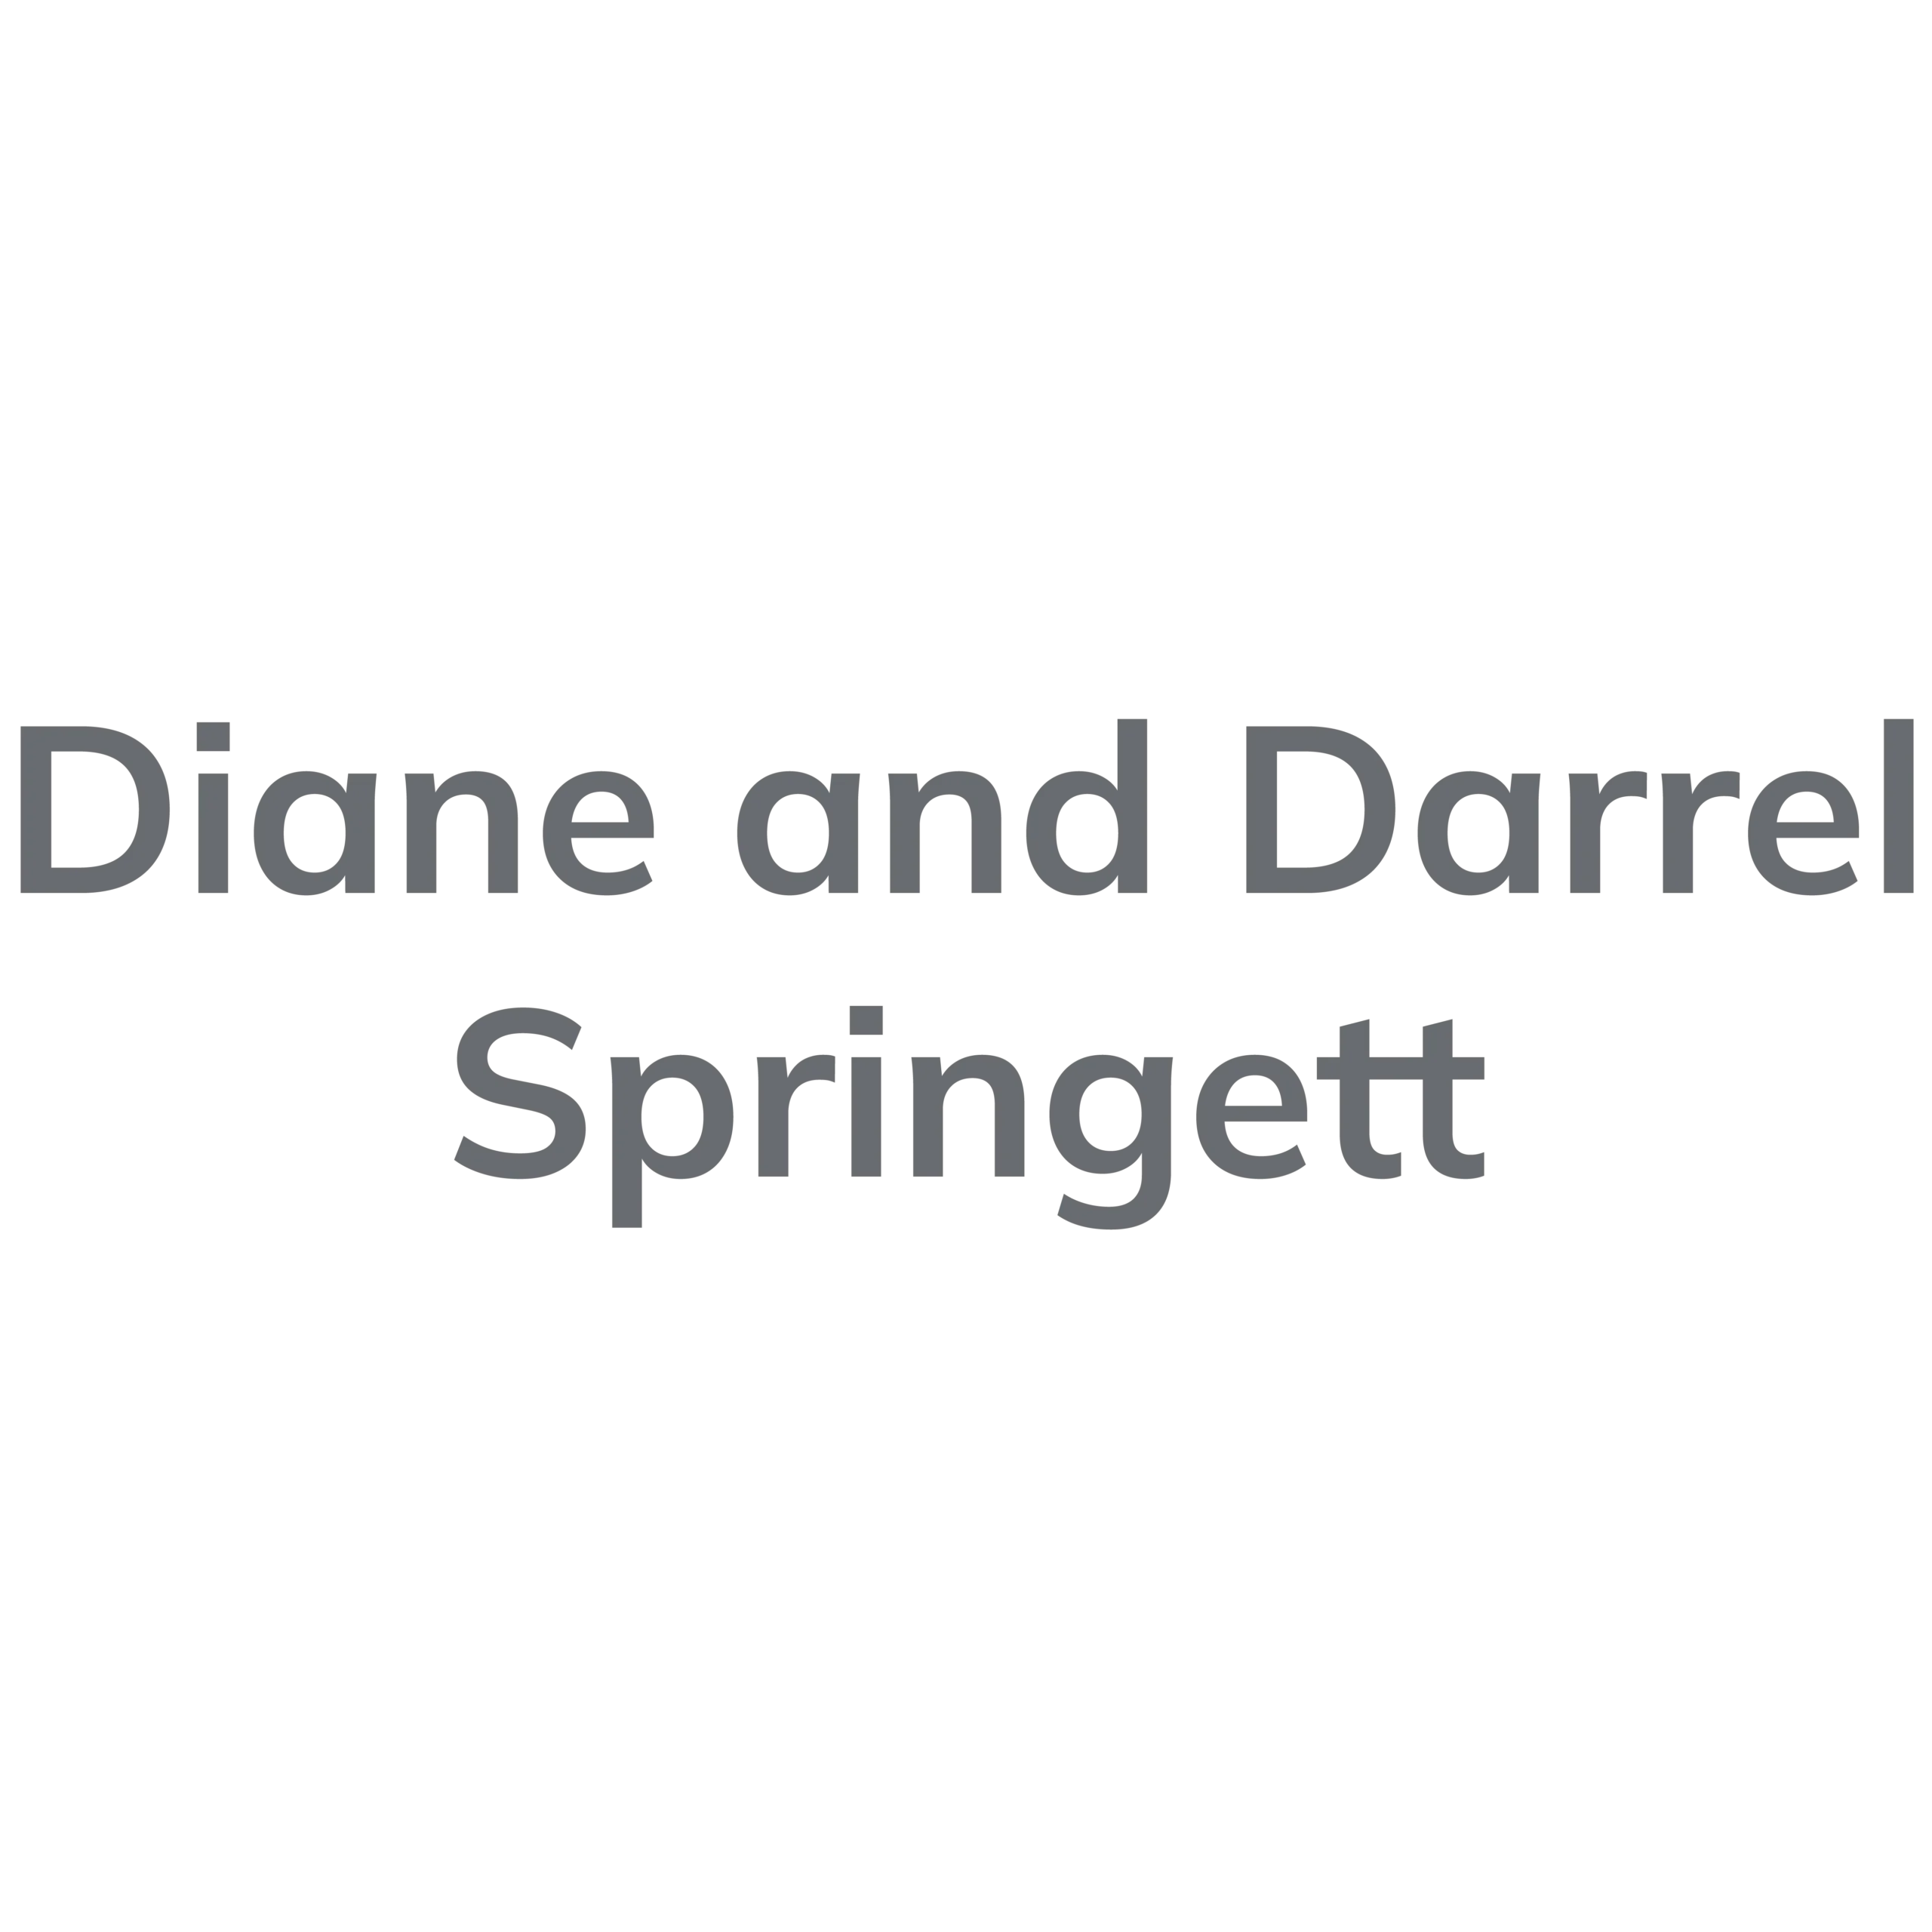 Diane and Darrel Springett